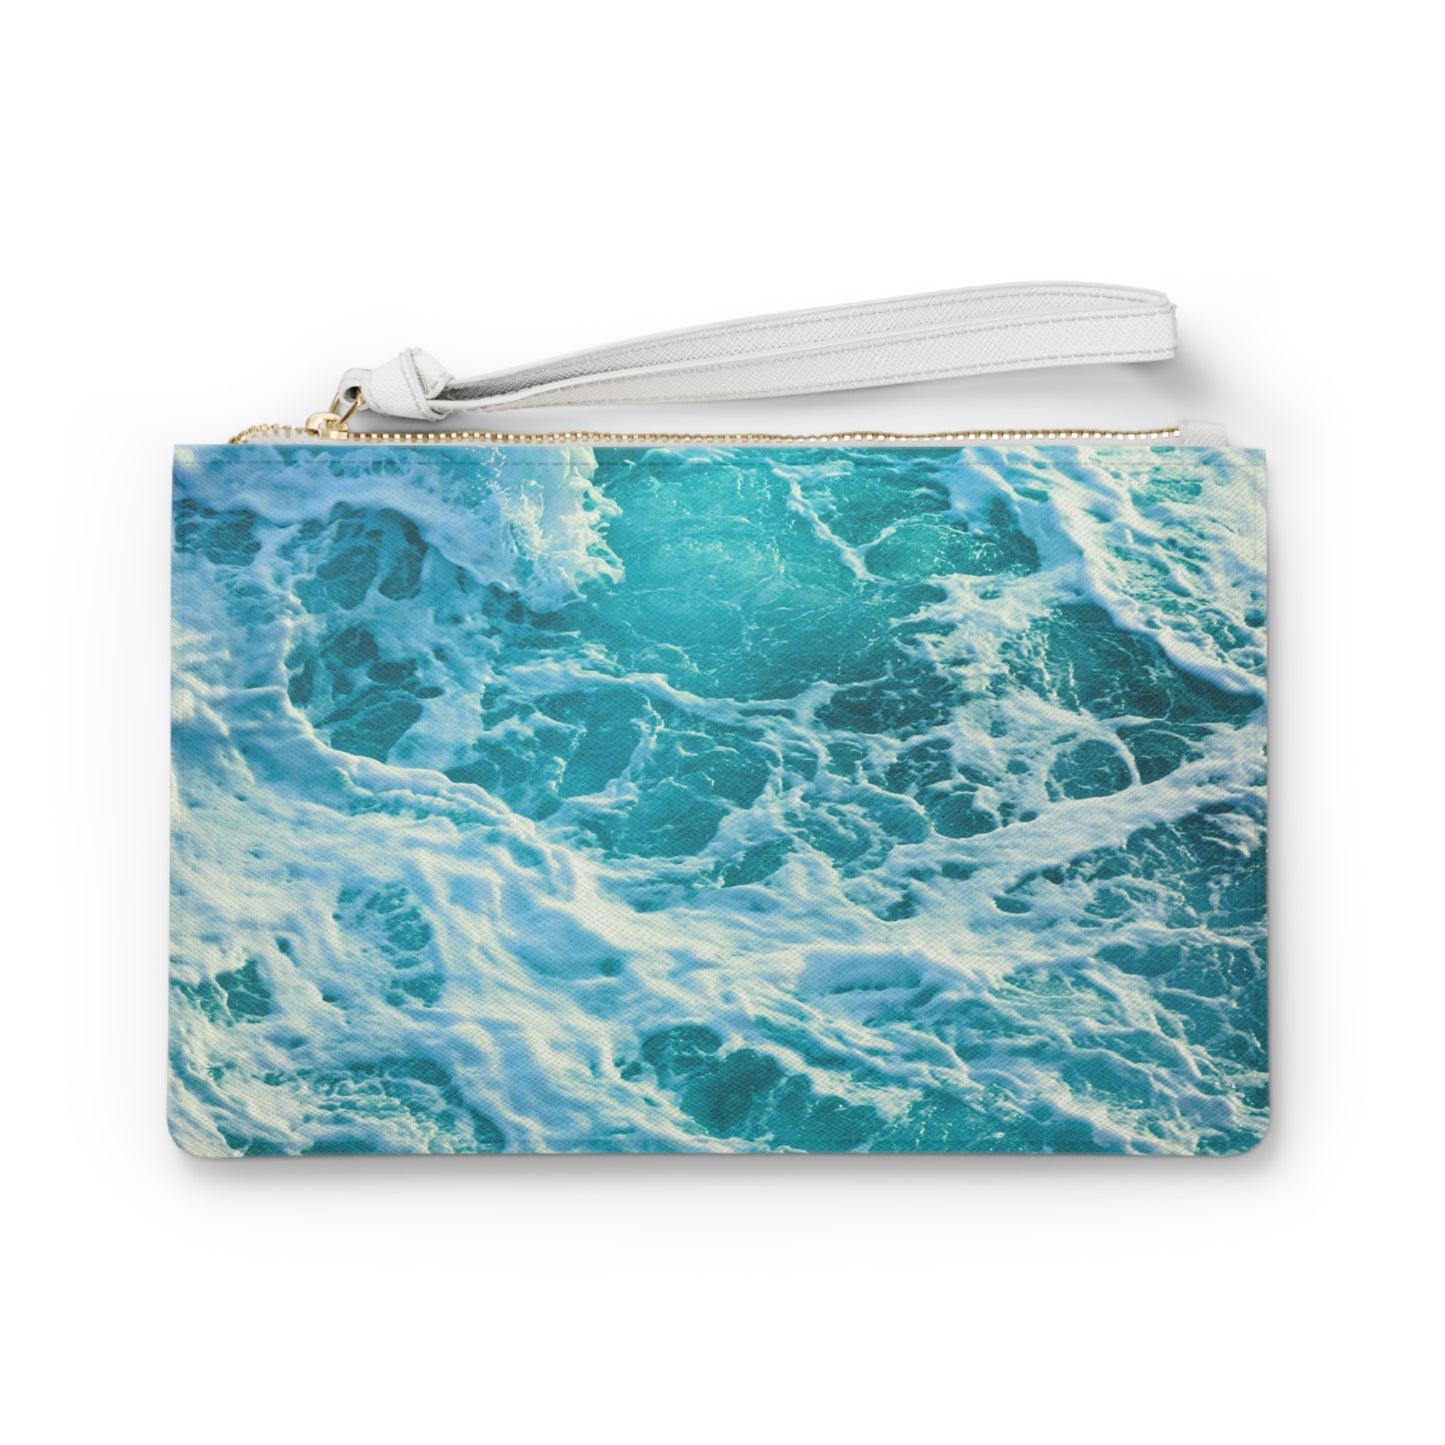 Ocean Blue Waves Coastal Beach House Decorative Pouch Clutch Bag